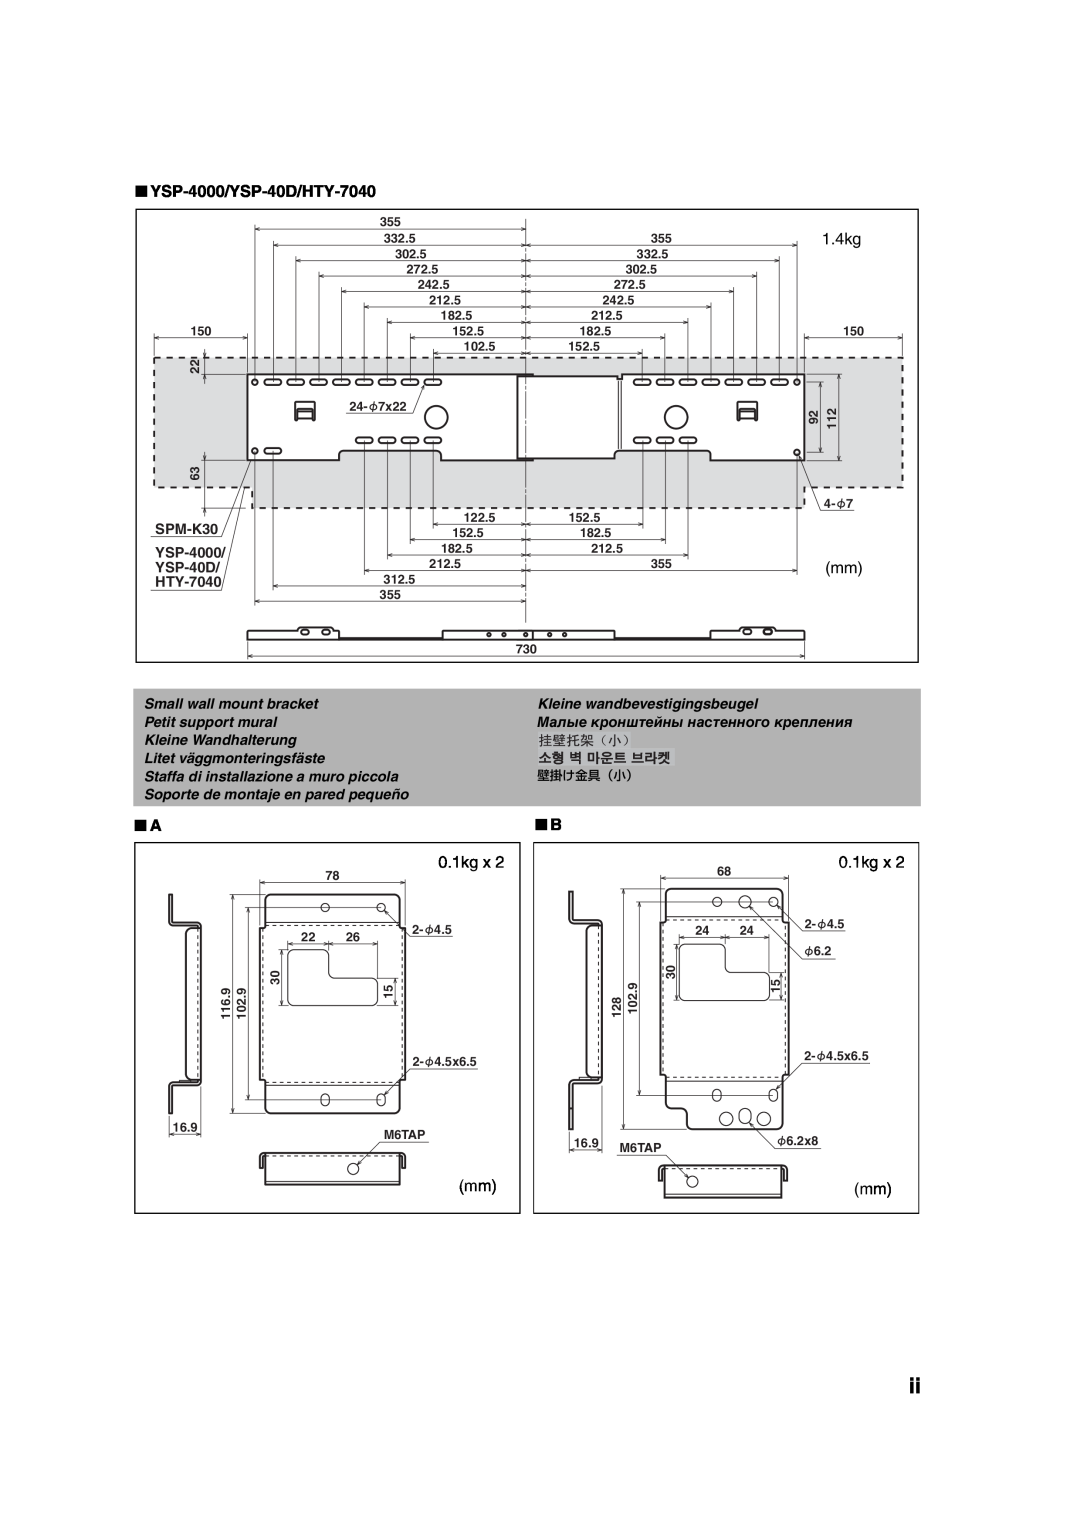 Yamaha SPMK30 0.1kg, SPM-K30, YSP-4000, YSP-40D, HTY-7040, Small wall mount bracket, Kleine wandbevestigingsbeugel 